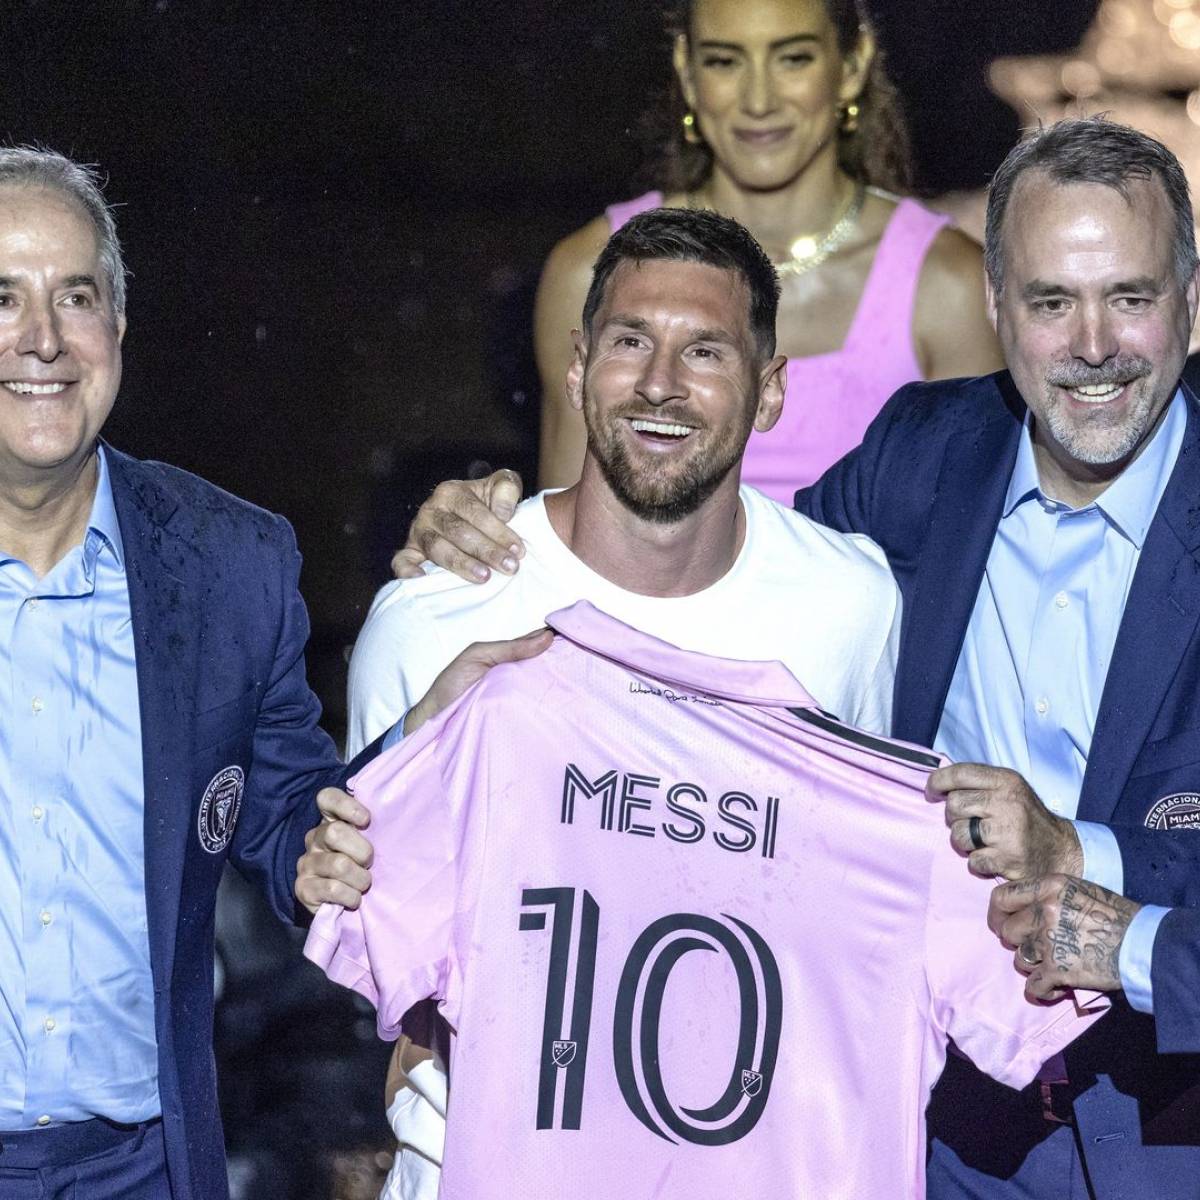 Ces maillots de foot collectors retracent les carrières de Ronaldo et Messi